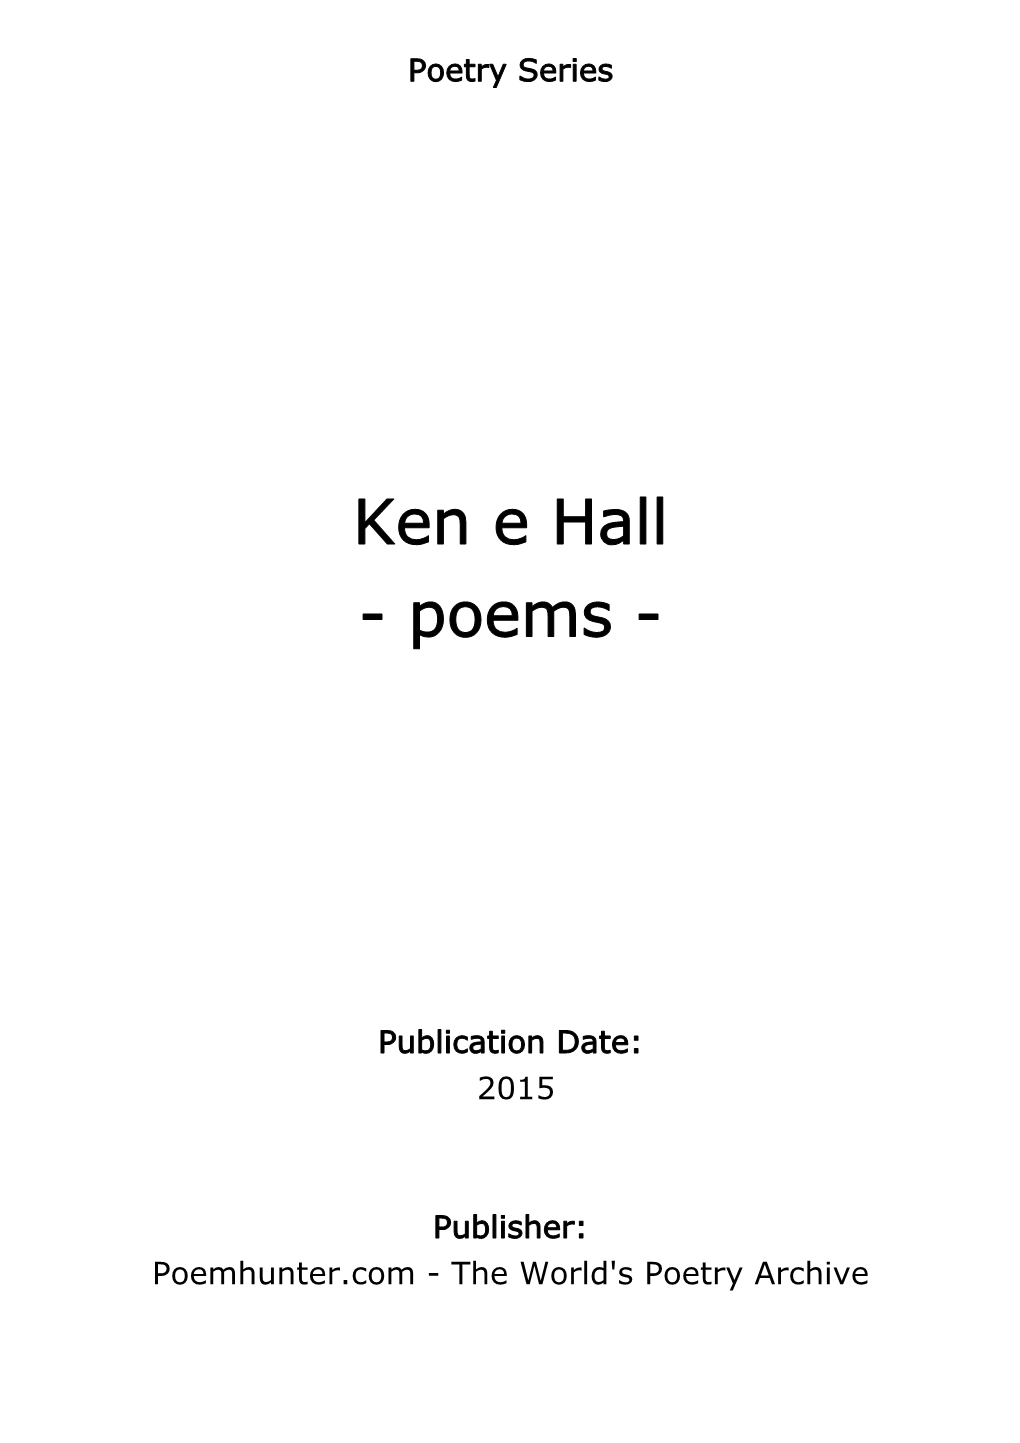 Ken E Hall - Poems